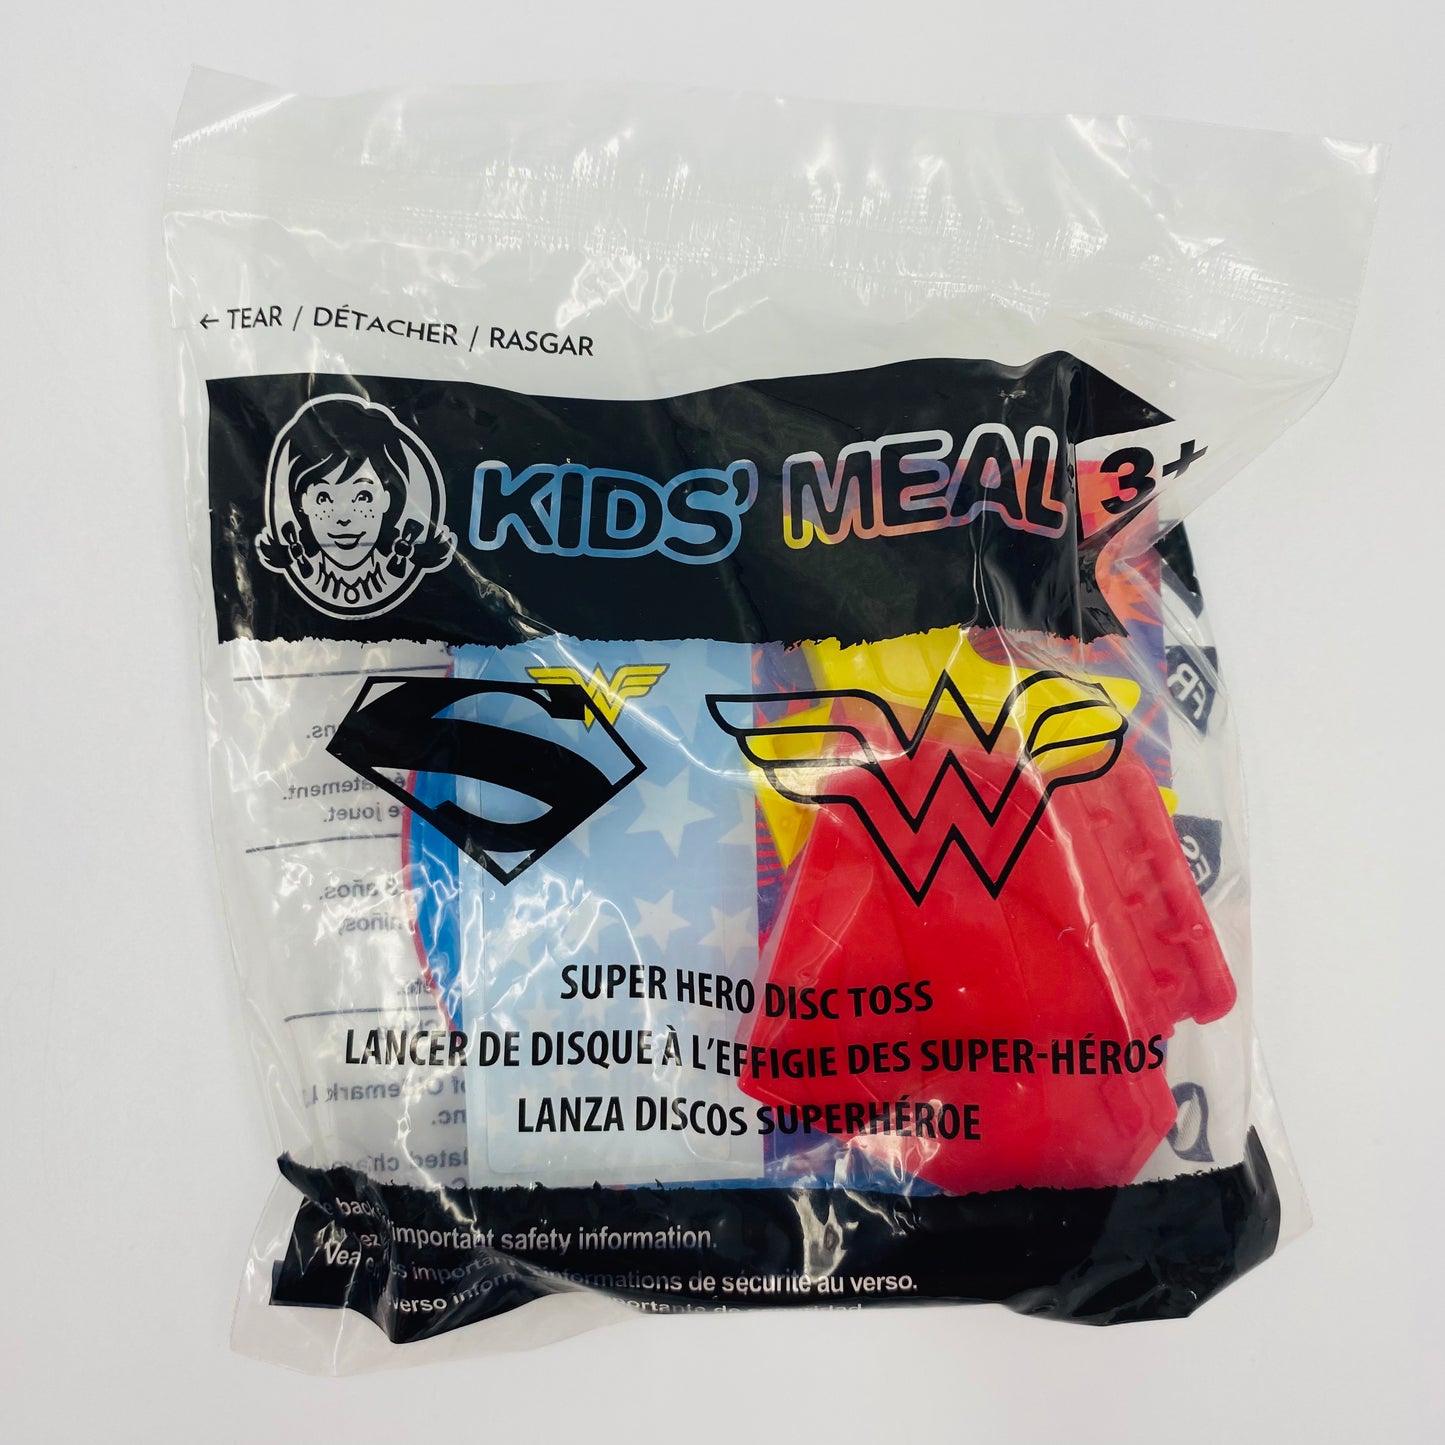 Superman/Wonder Woman Super Hero Disc Toss Wendy's Kids' Meal toy (2013) bagged